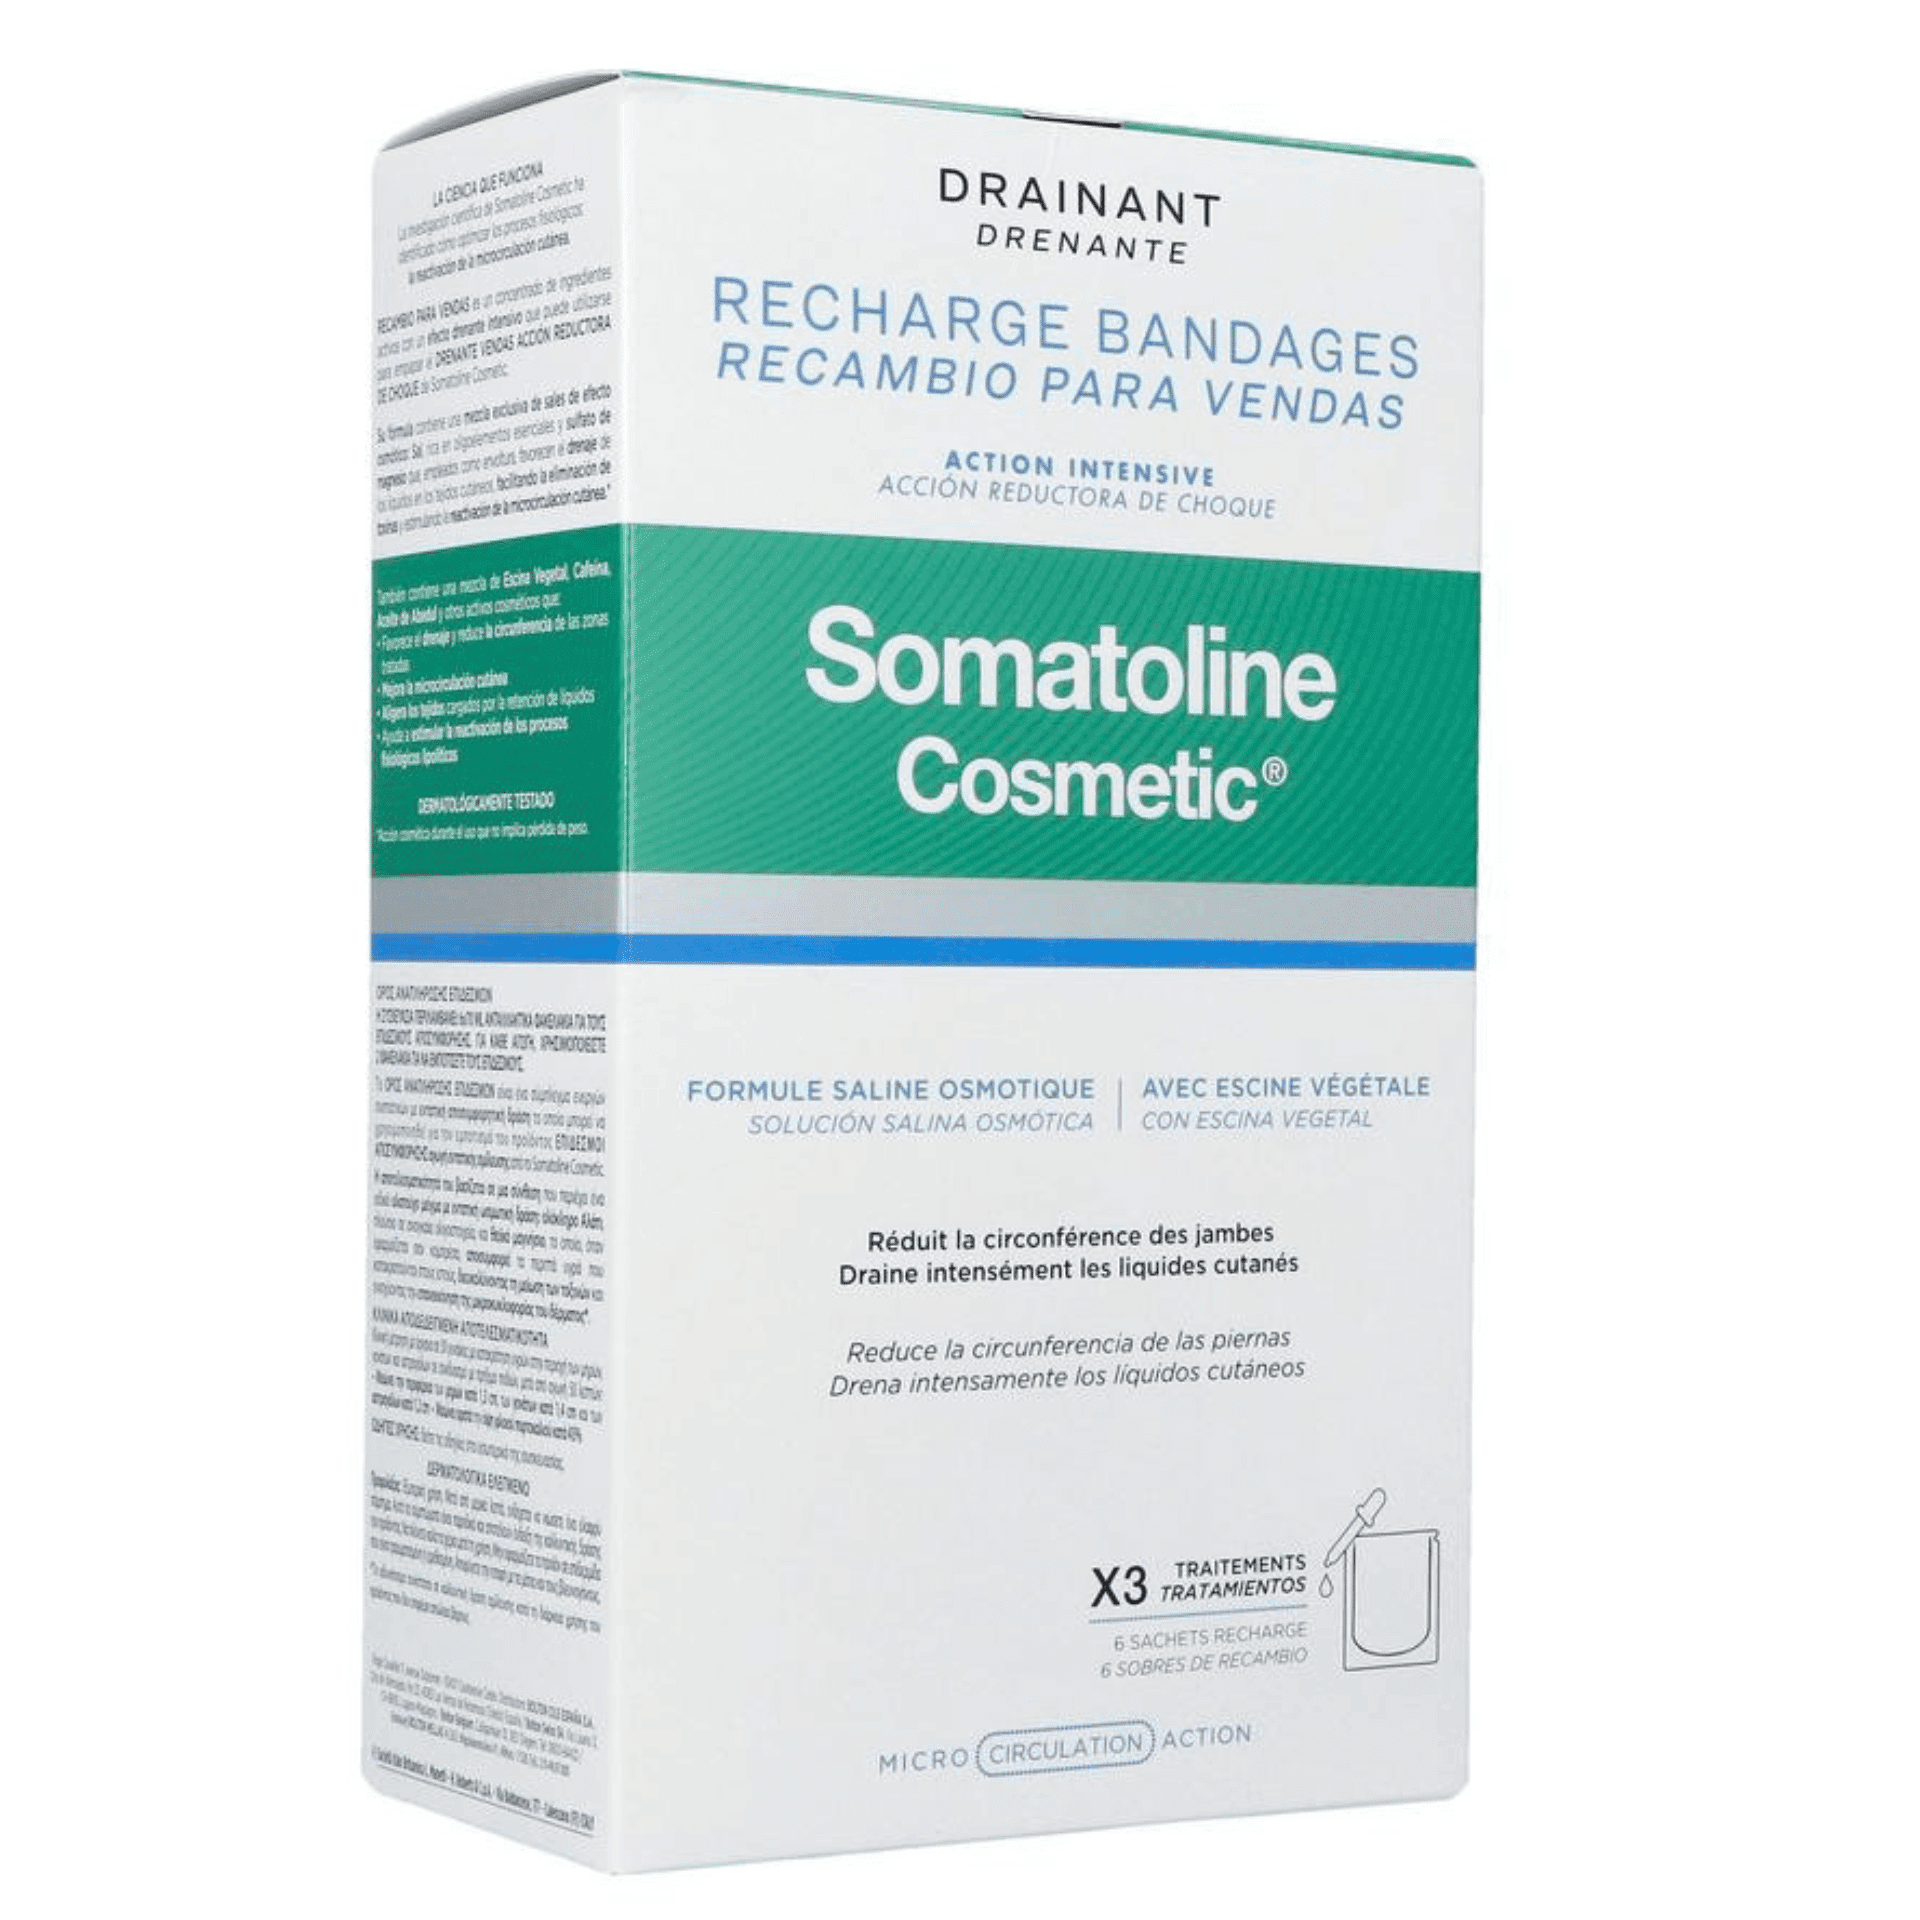 Somatoline Cosmetic Drainerende Windels Hervullende Kit